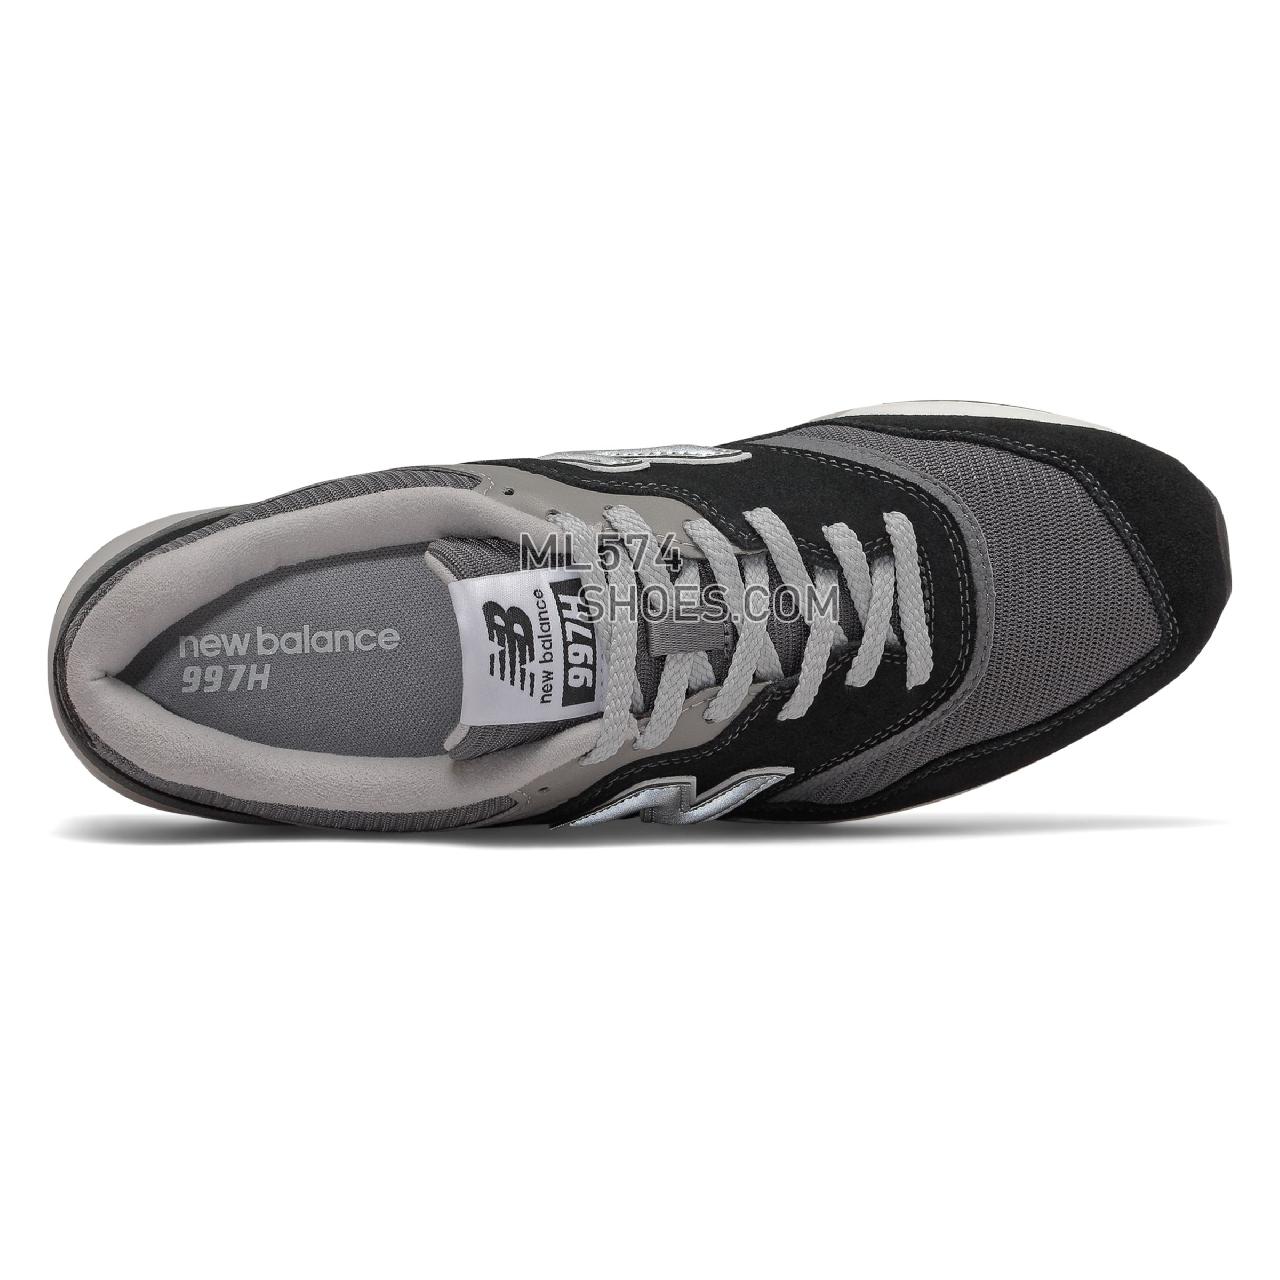 New Balance 997H - Men's Sport Style Sneakers - Black with Castlerock - CM997HBK